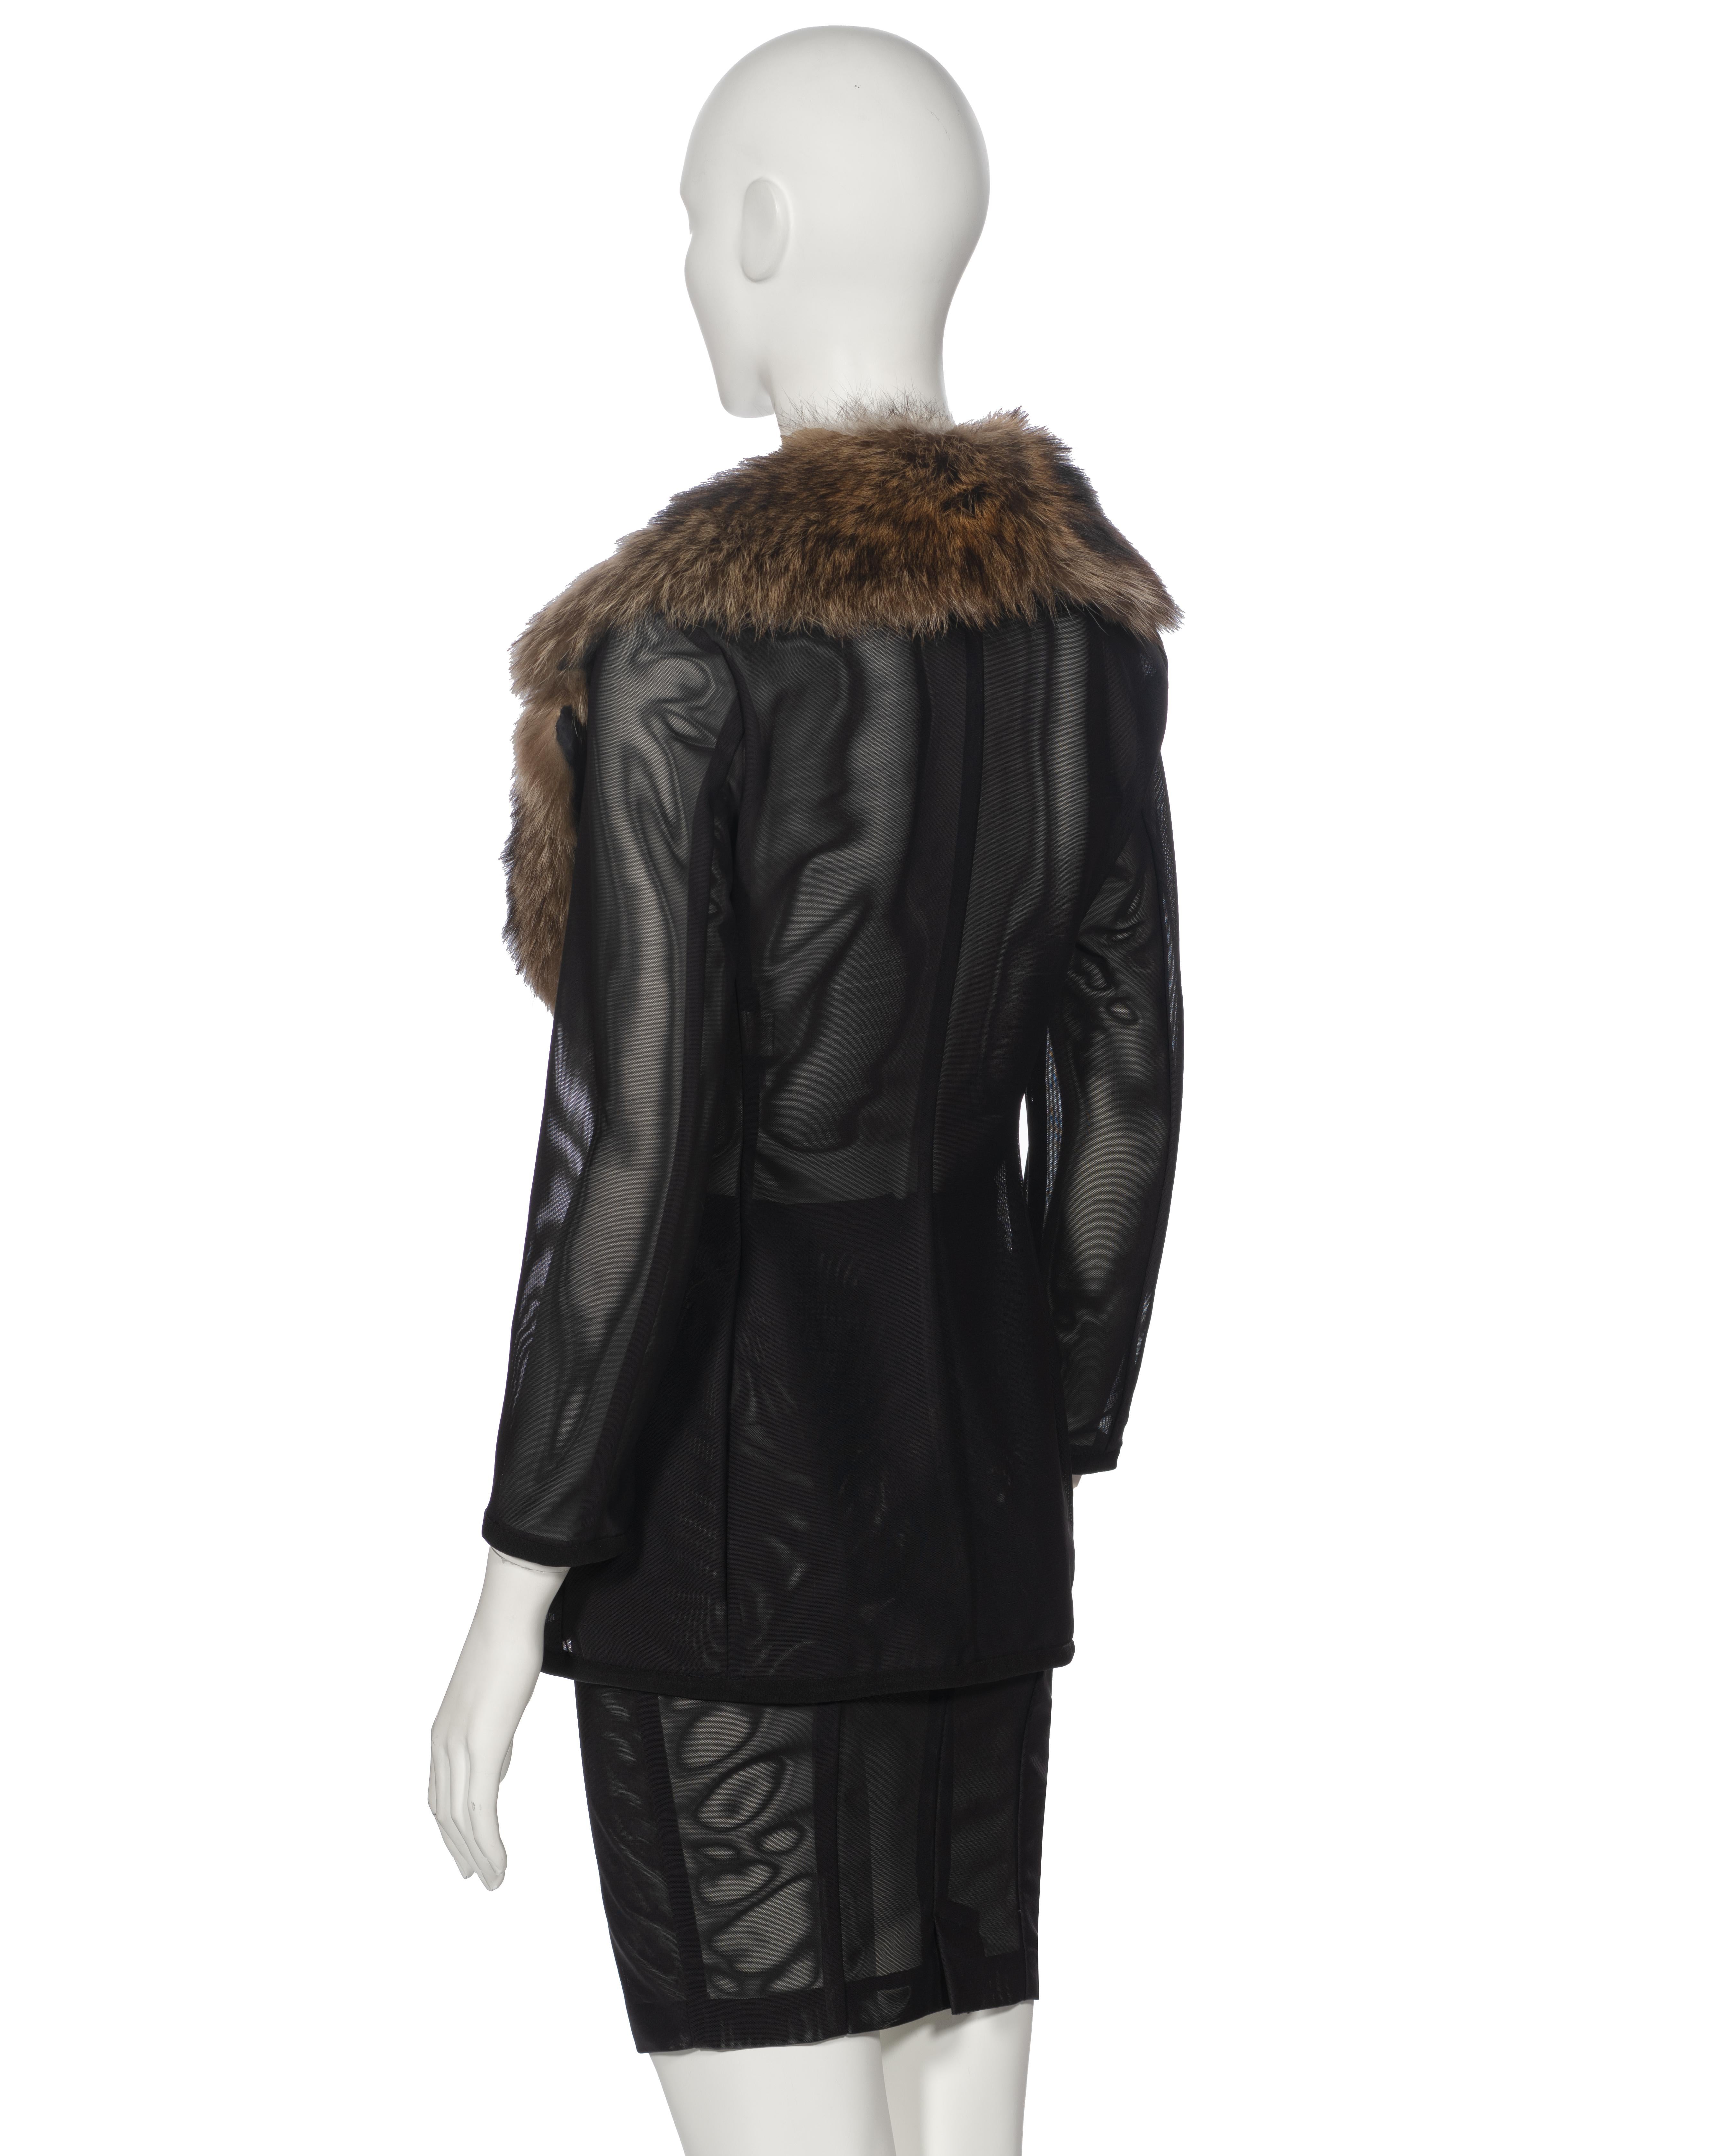 Dolce & Gabbana Black Power Net Skirt Suit with Fur Collar, fw 1995 8